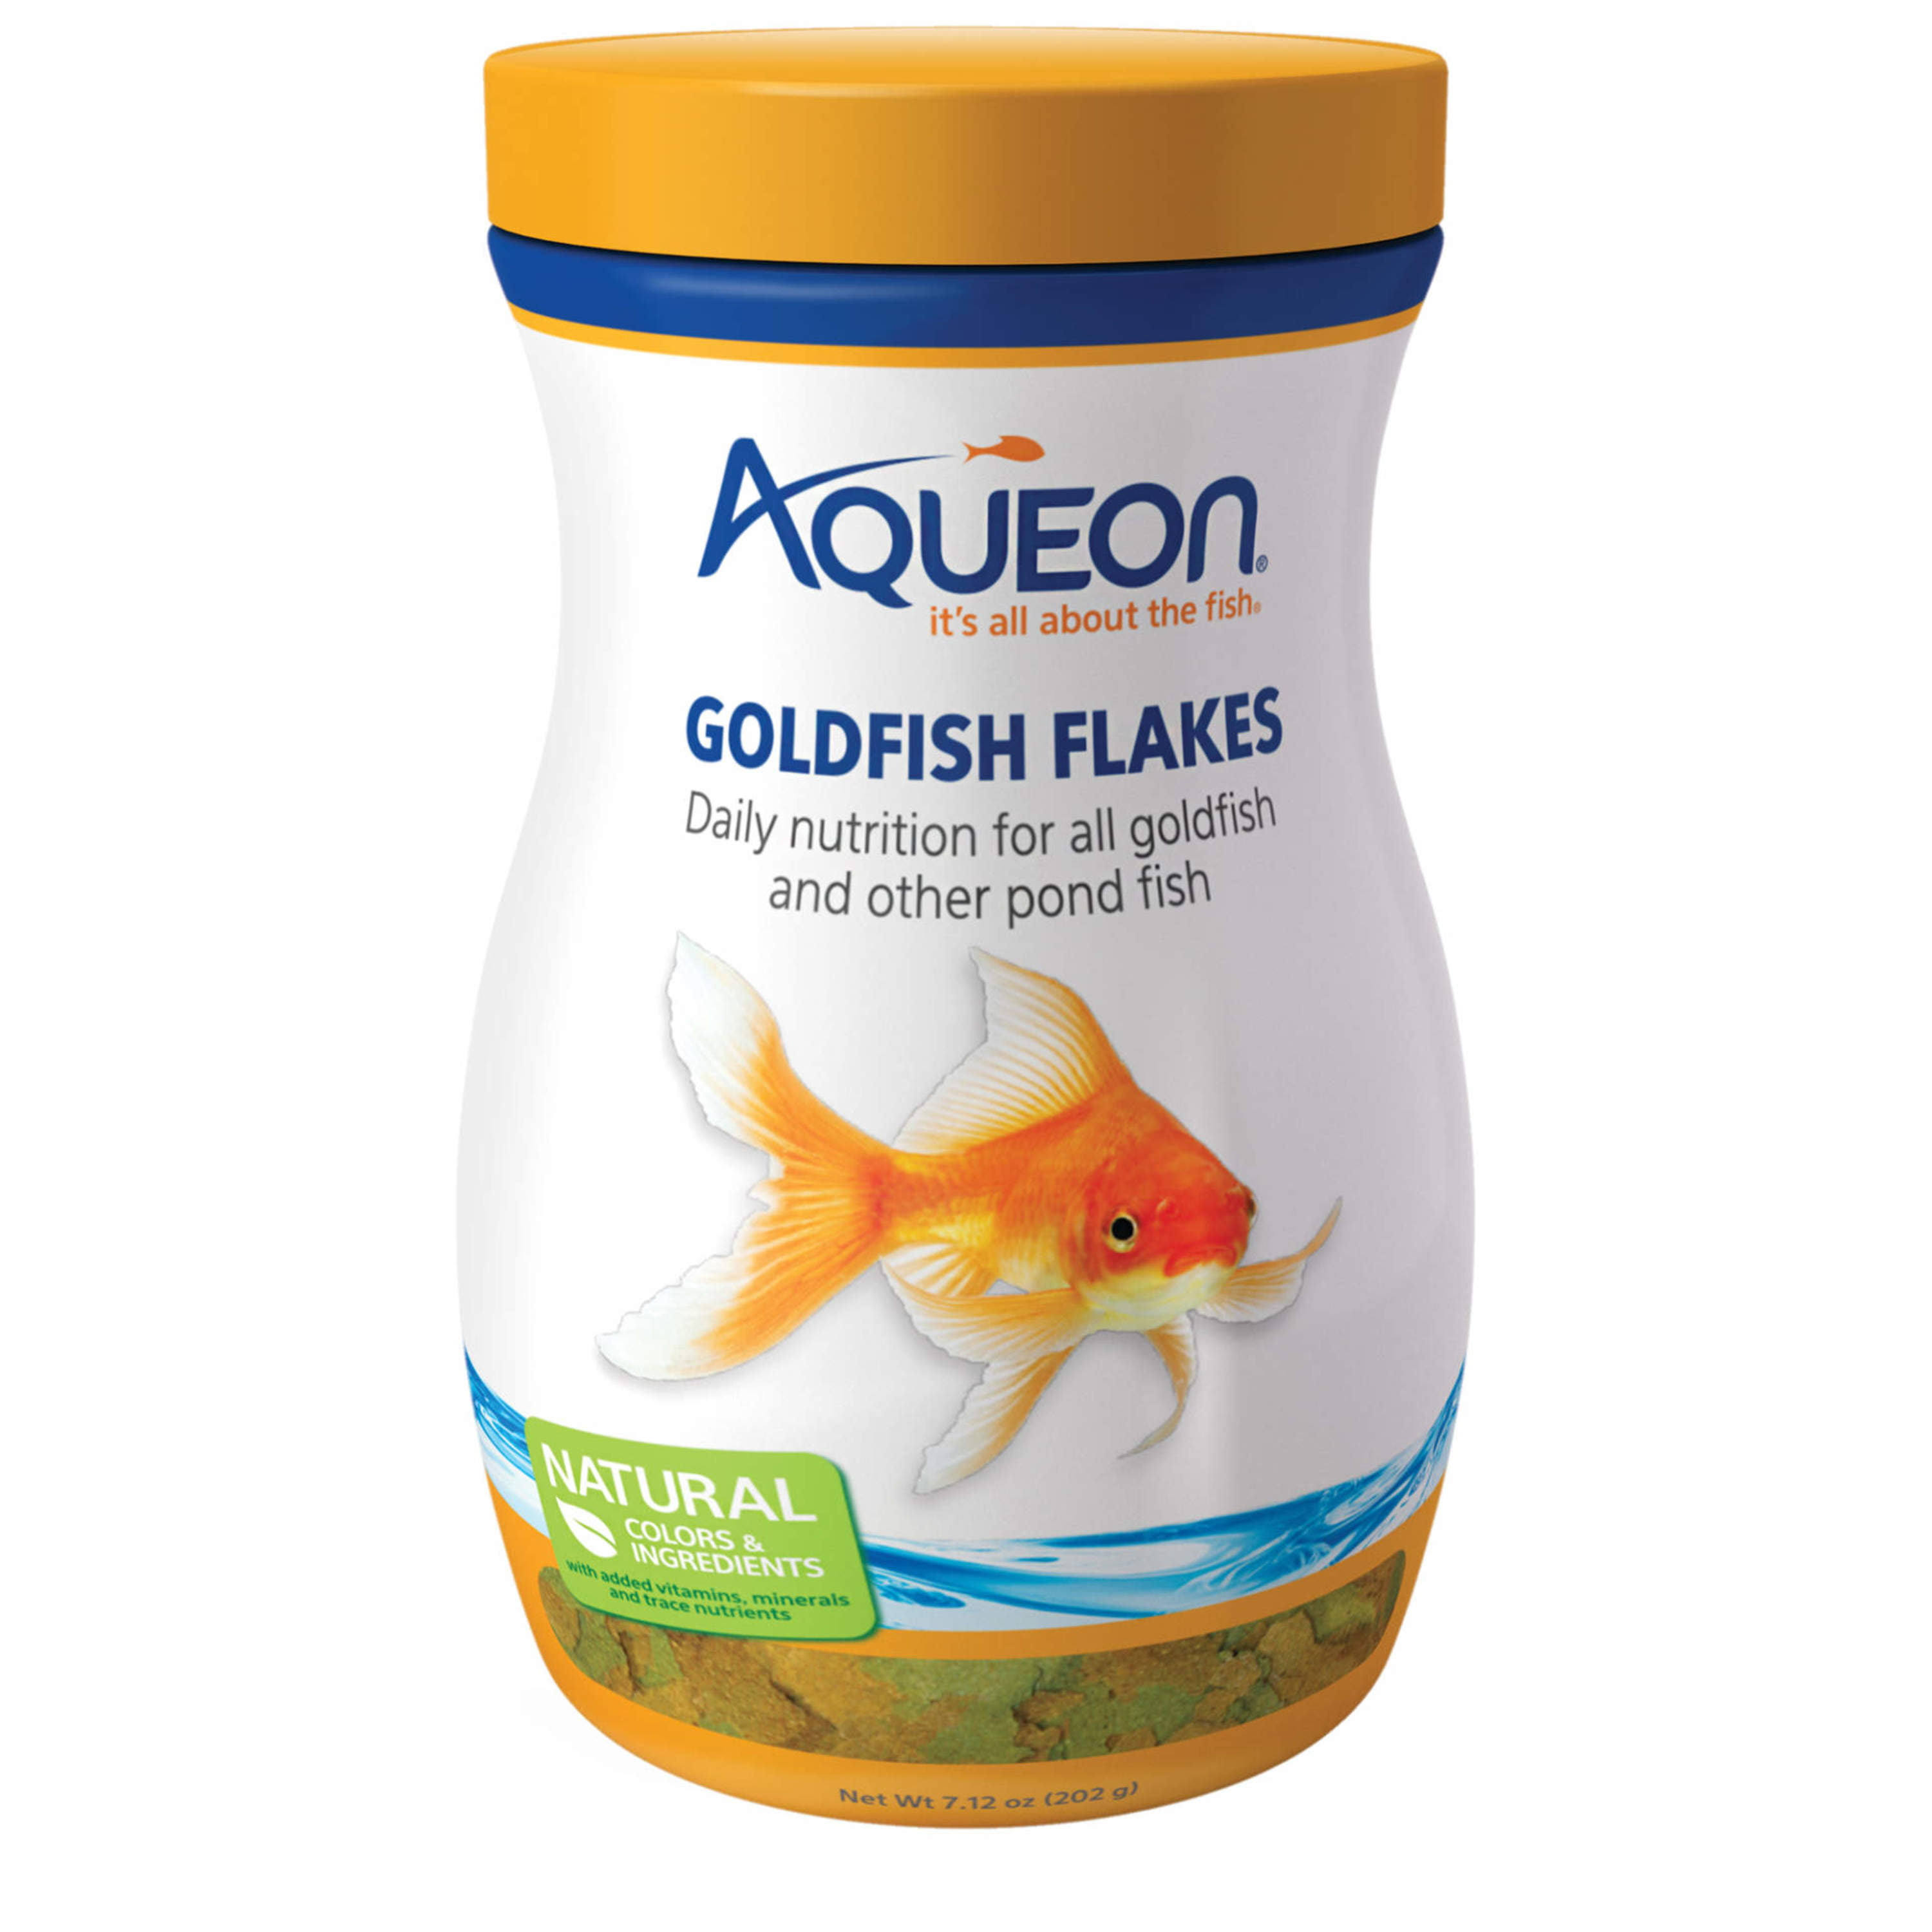 Aqueon Goldfish Flakes Food - 7.12oz